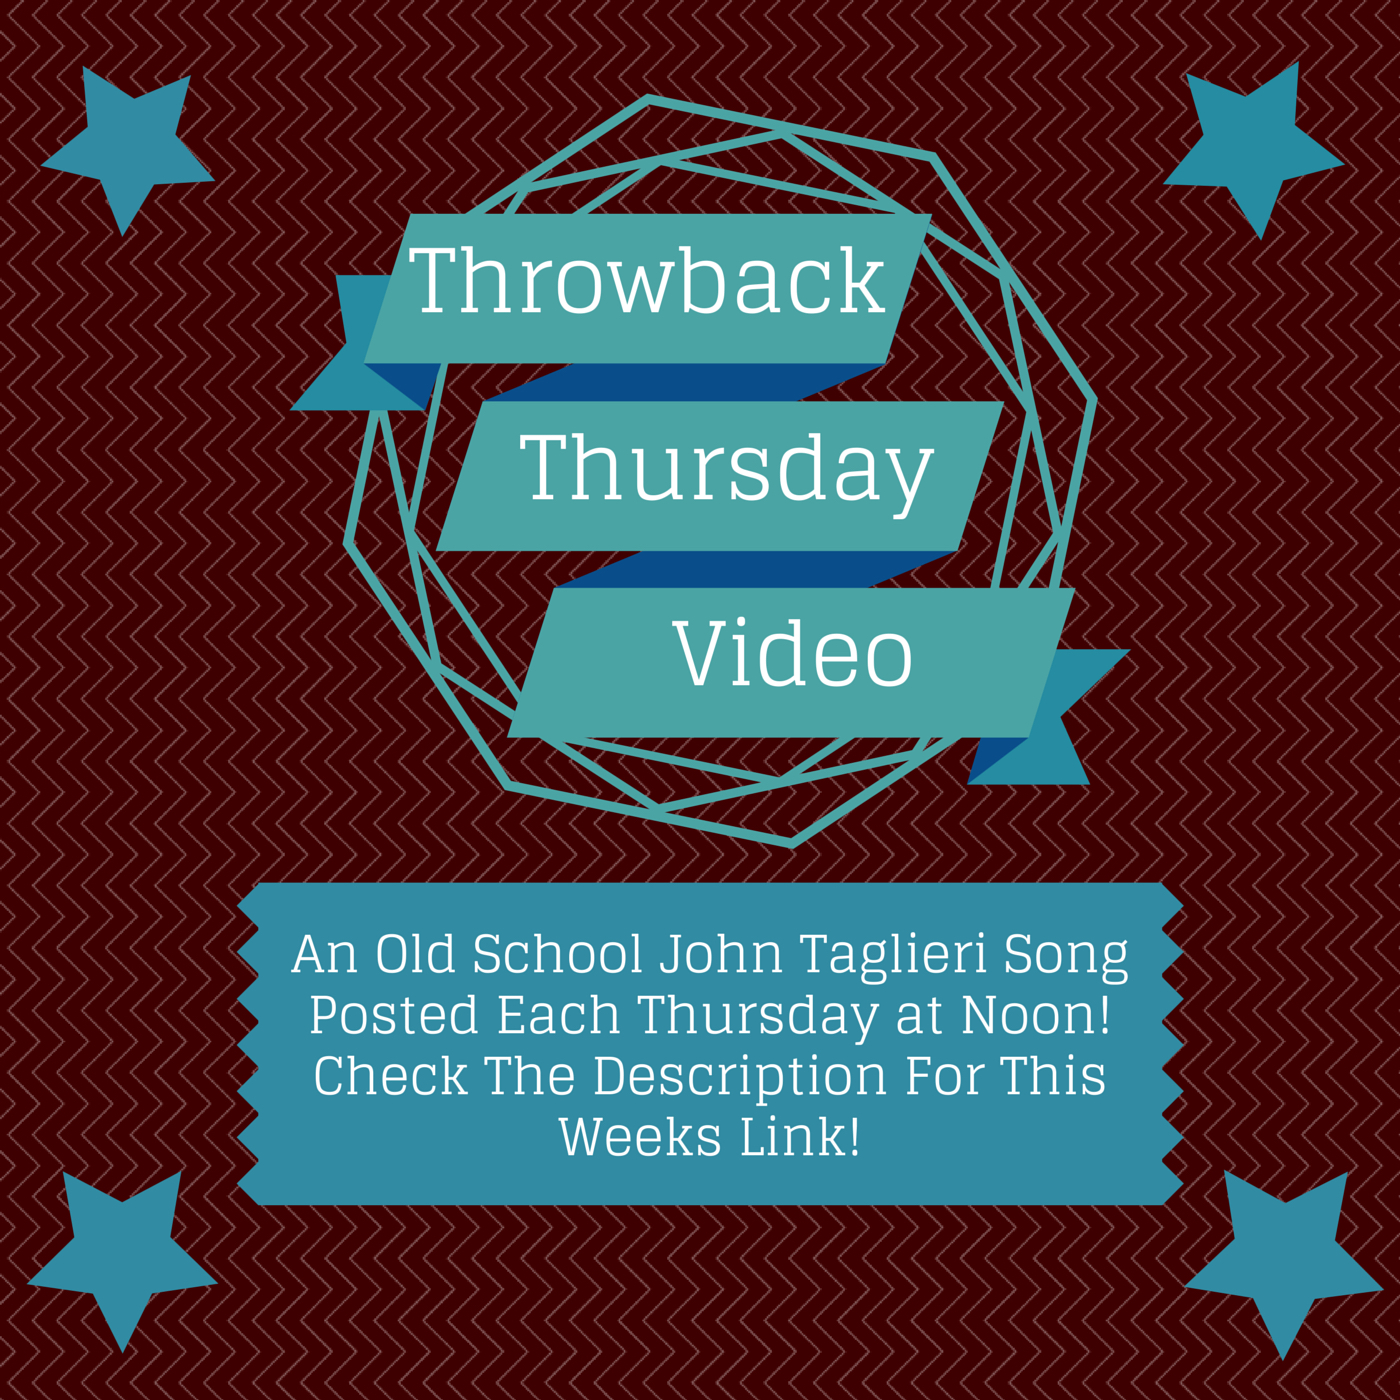 Throwback Thursday Video